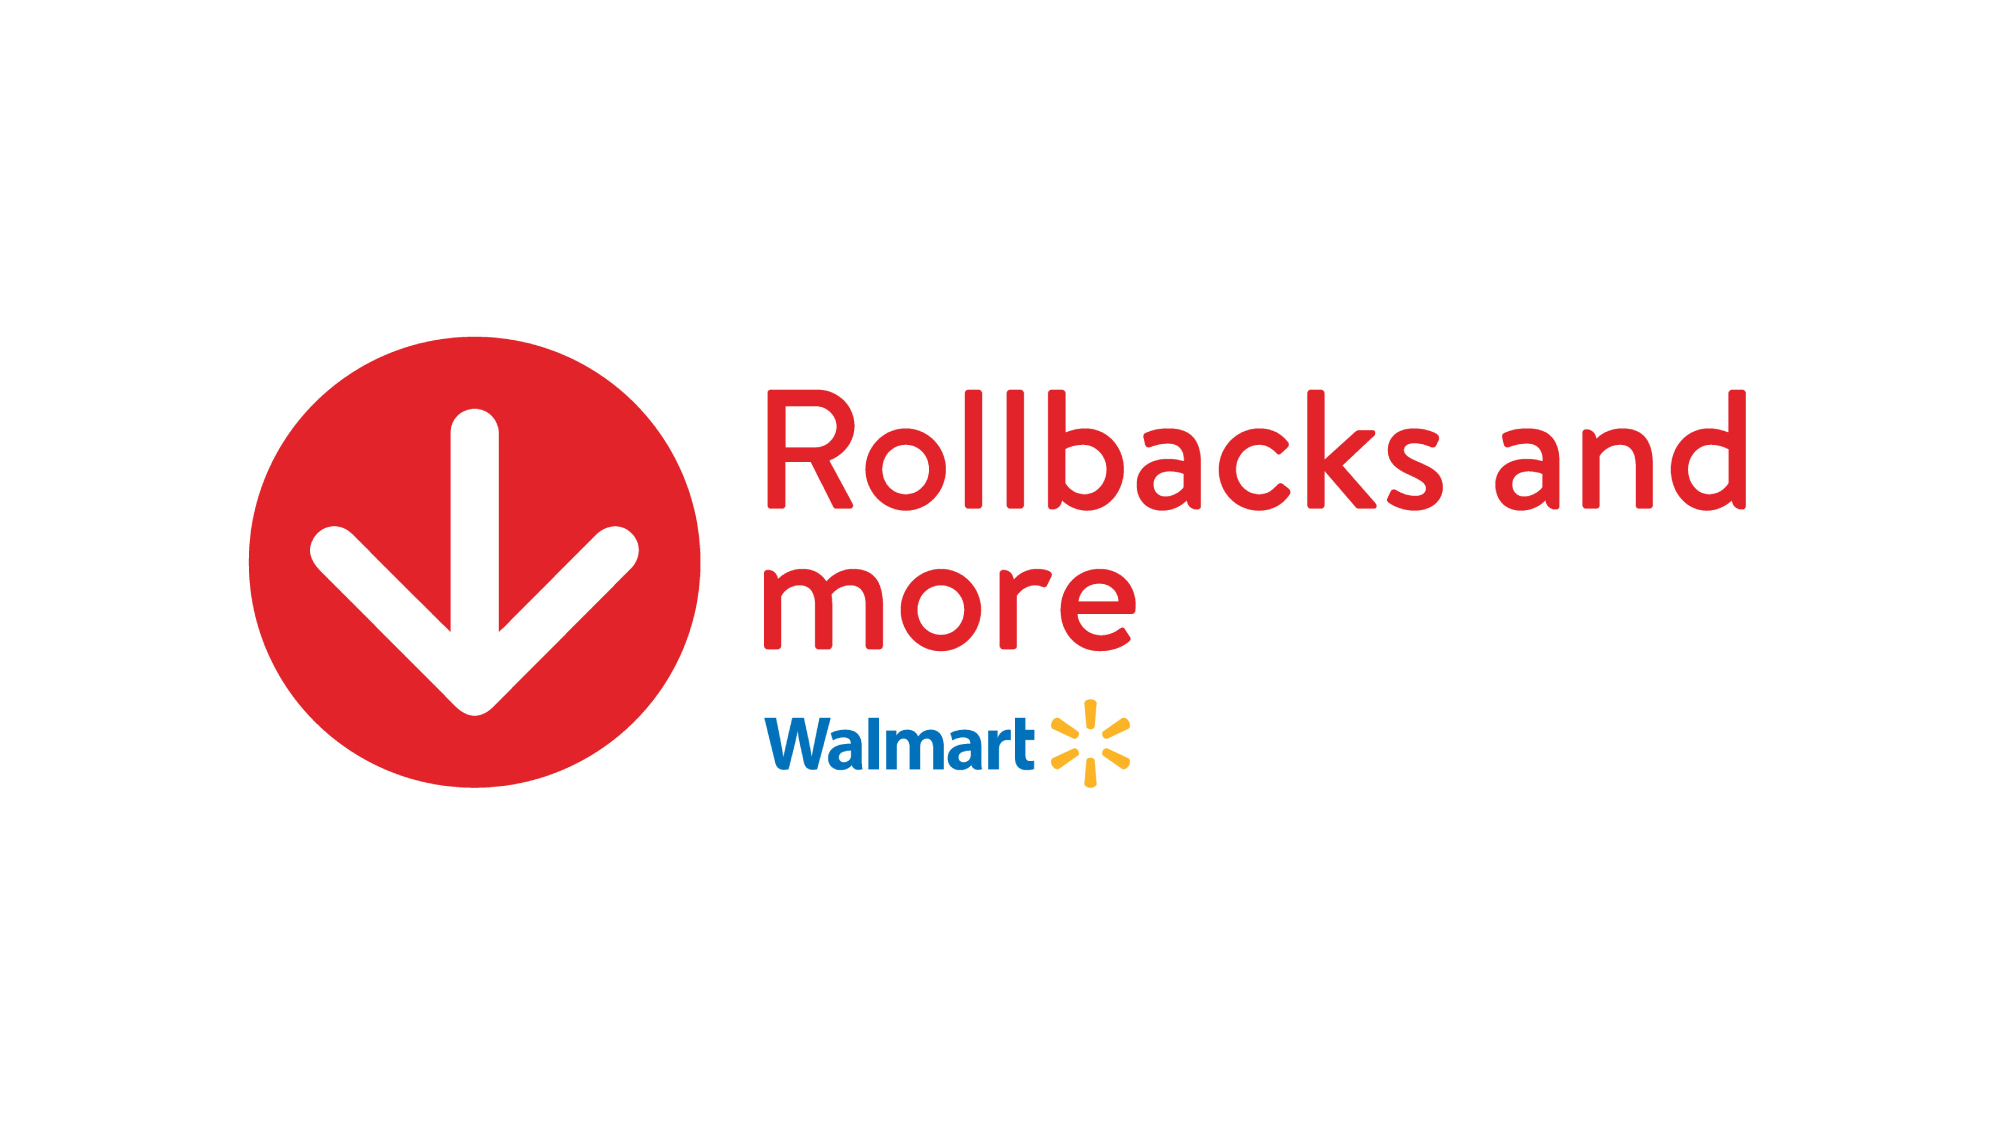 Walmart Rollbacks and more logo